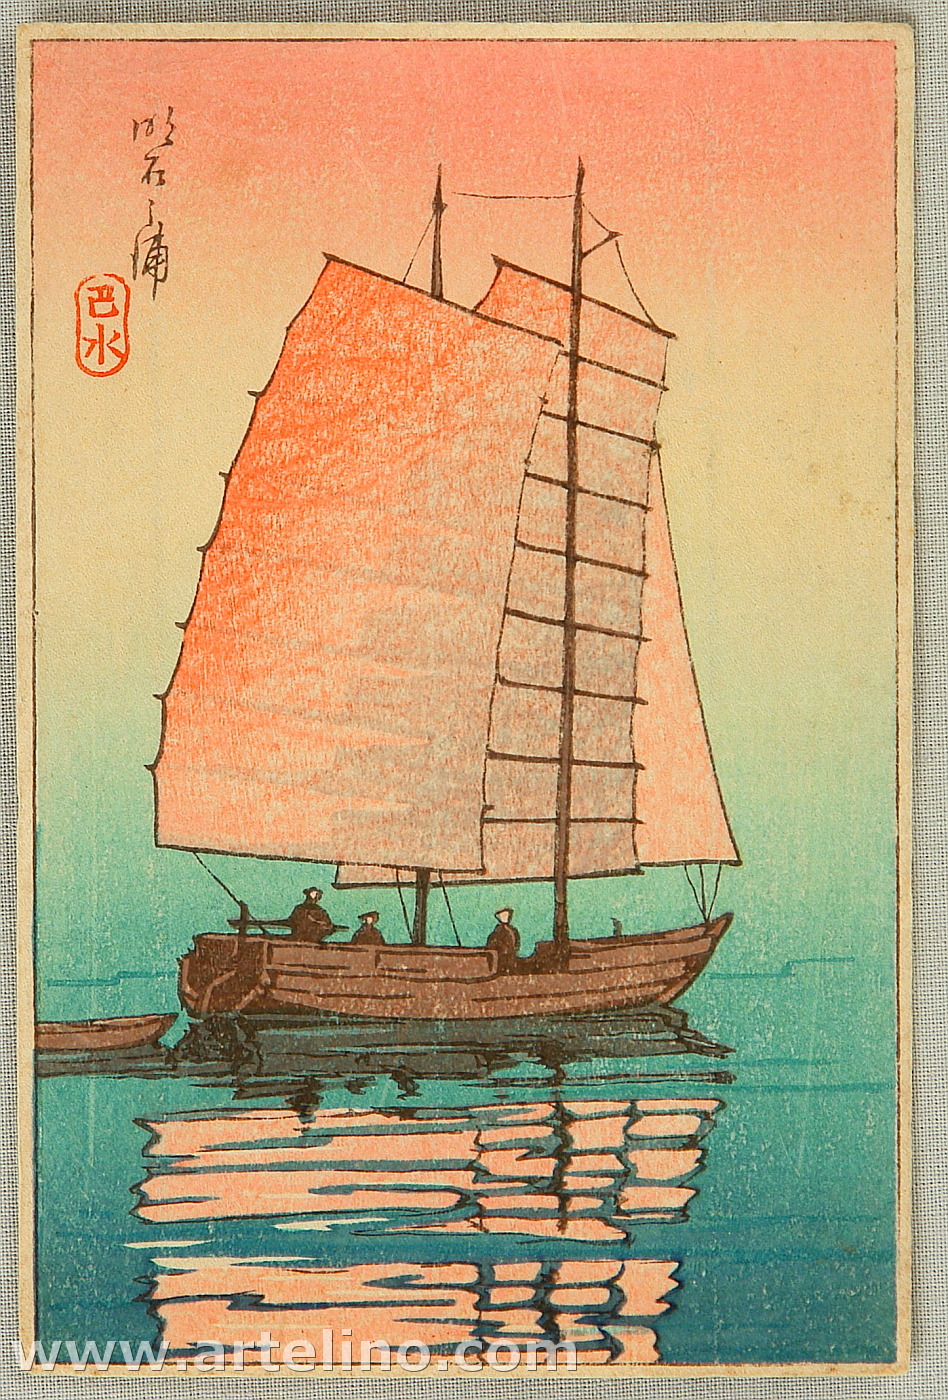 Hasui Kawase - Sail Boat in Sunset Glow